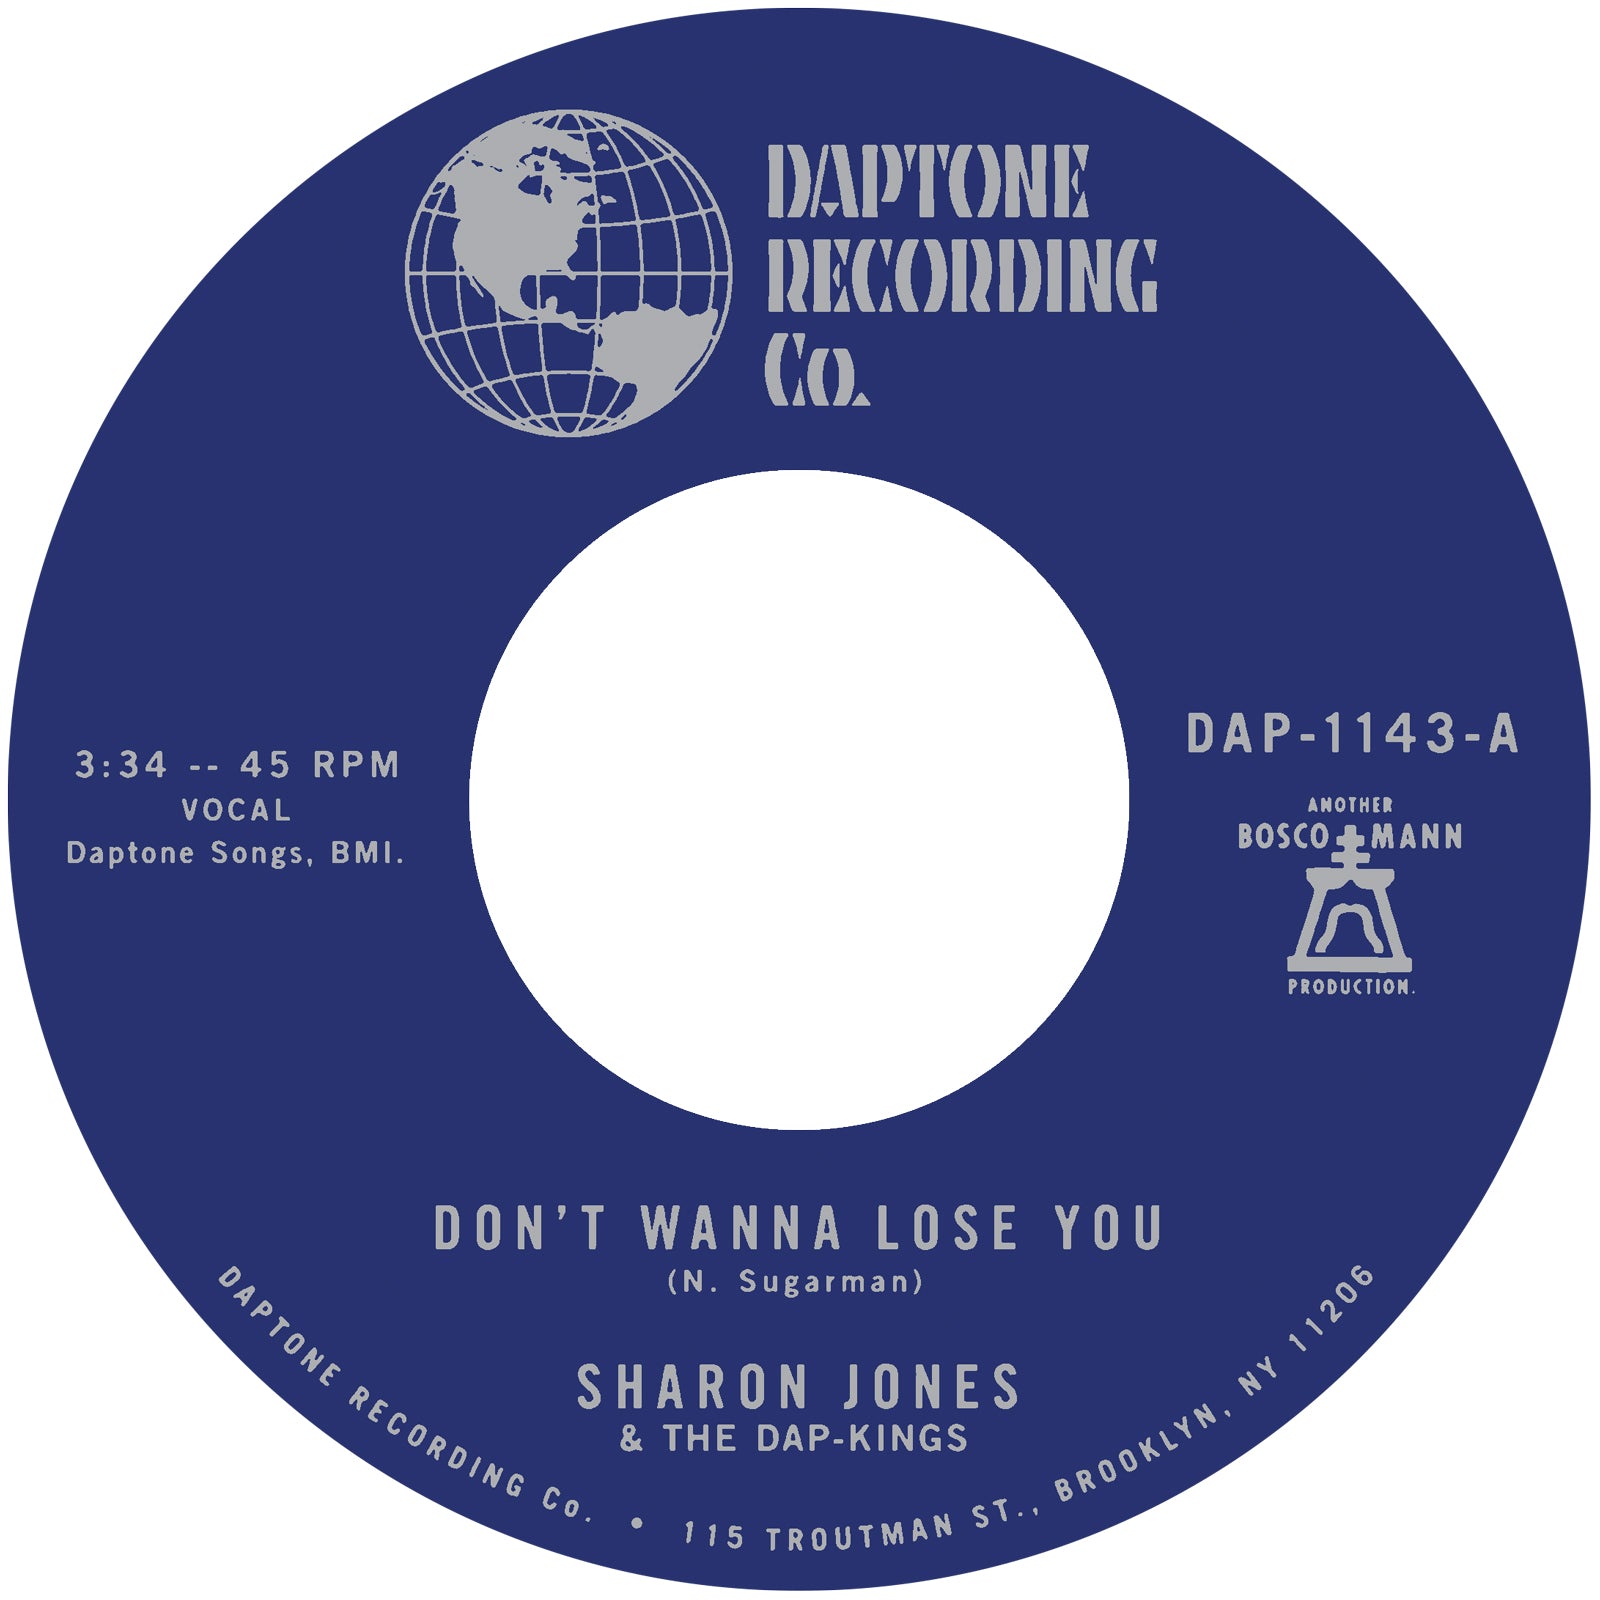 Sharon Jones & the Dap Kings "Don't Wanna Lose You" 45